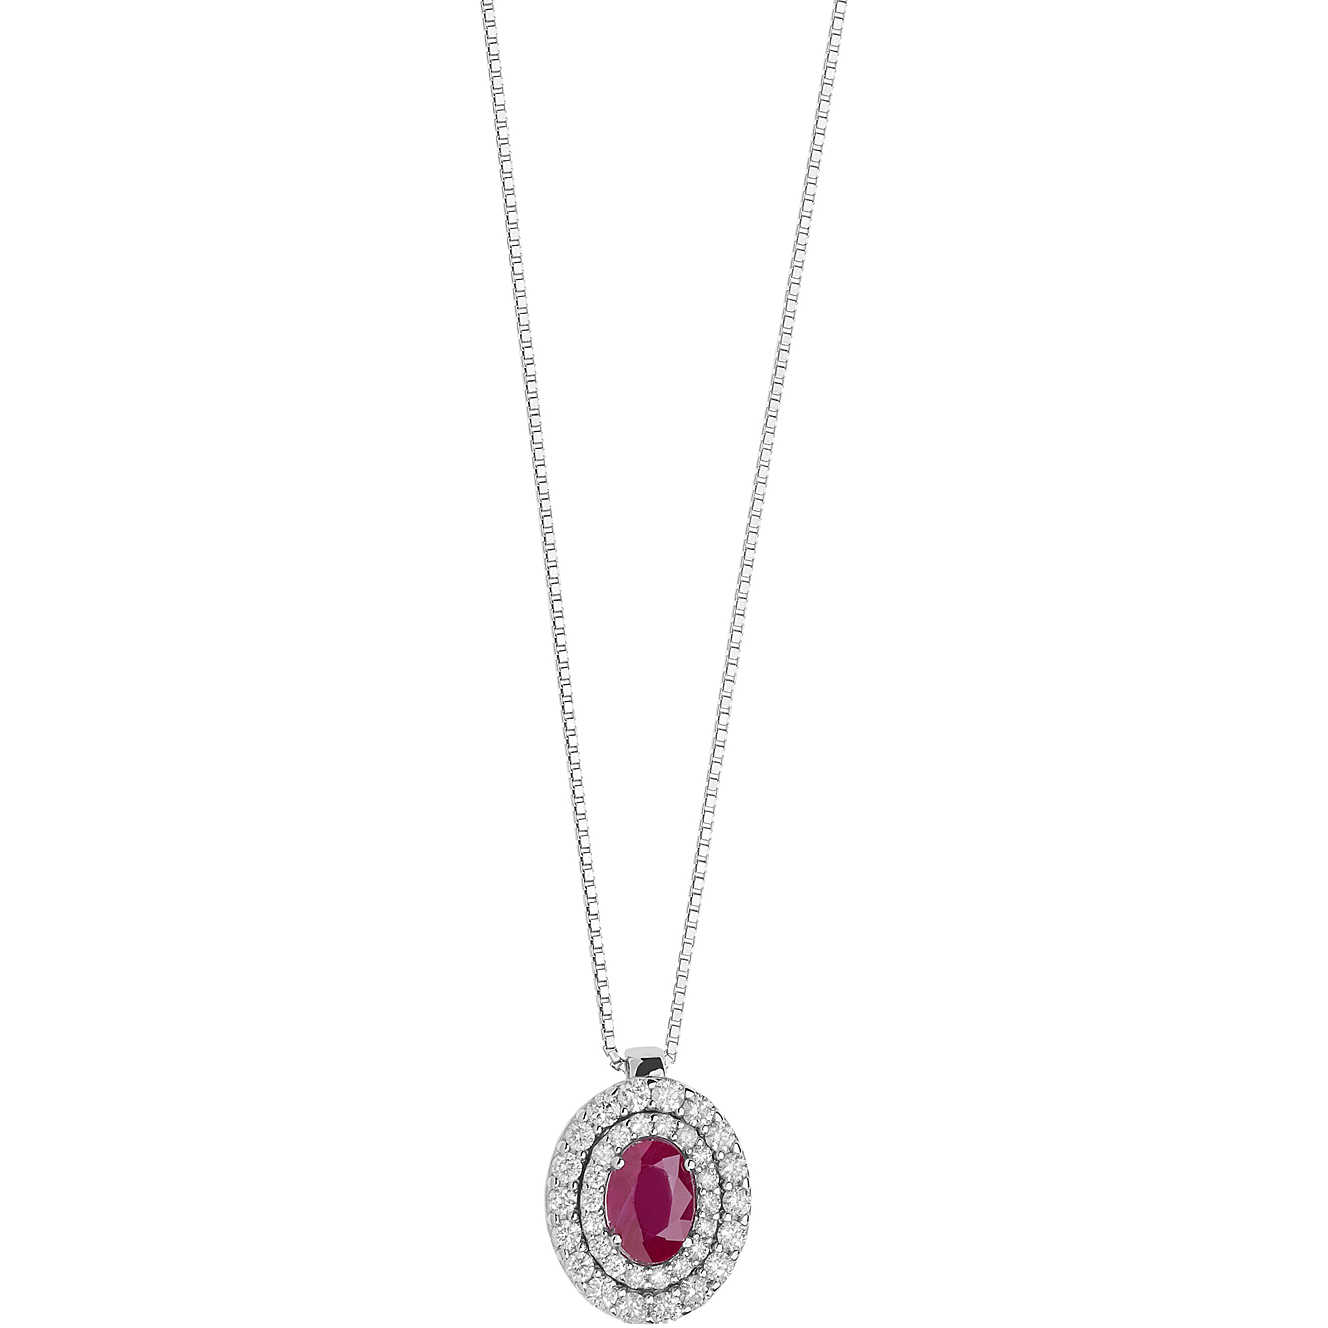 Orion GLB 1473 Women’s Jewelry Necklace